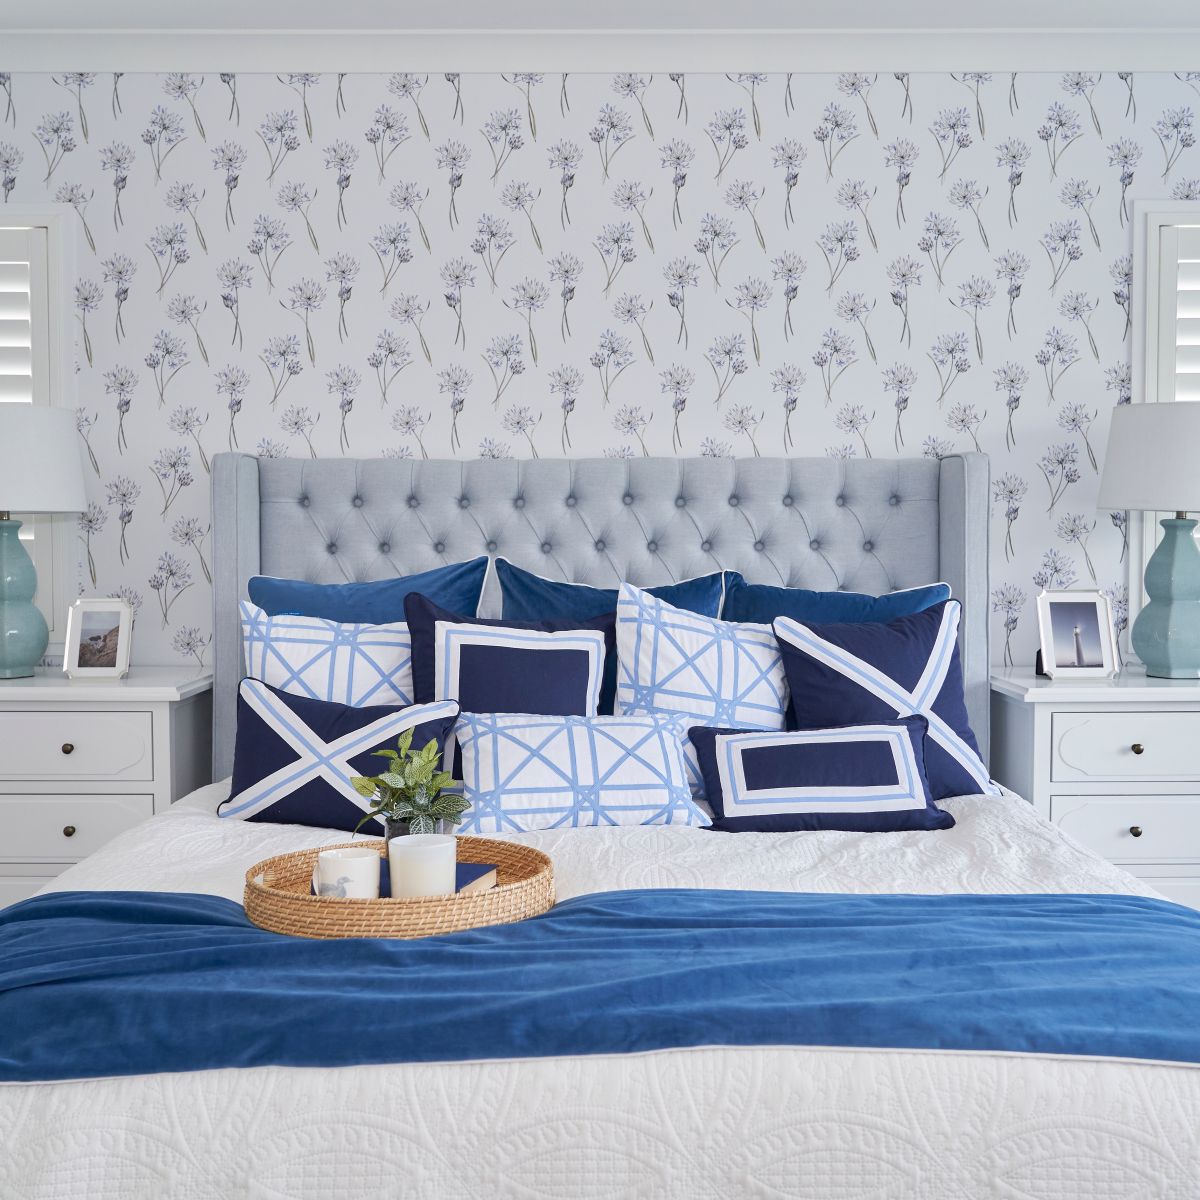 AVALON Dark Blue Border Cushion Cover 30 cm by 50 cm | Hamptons Home